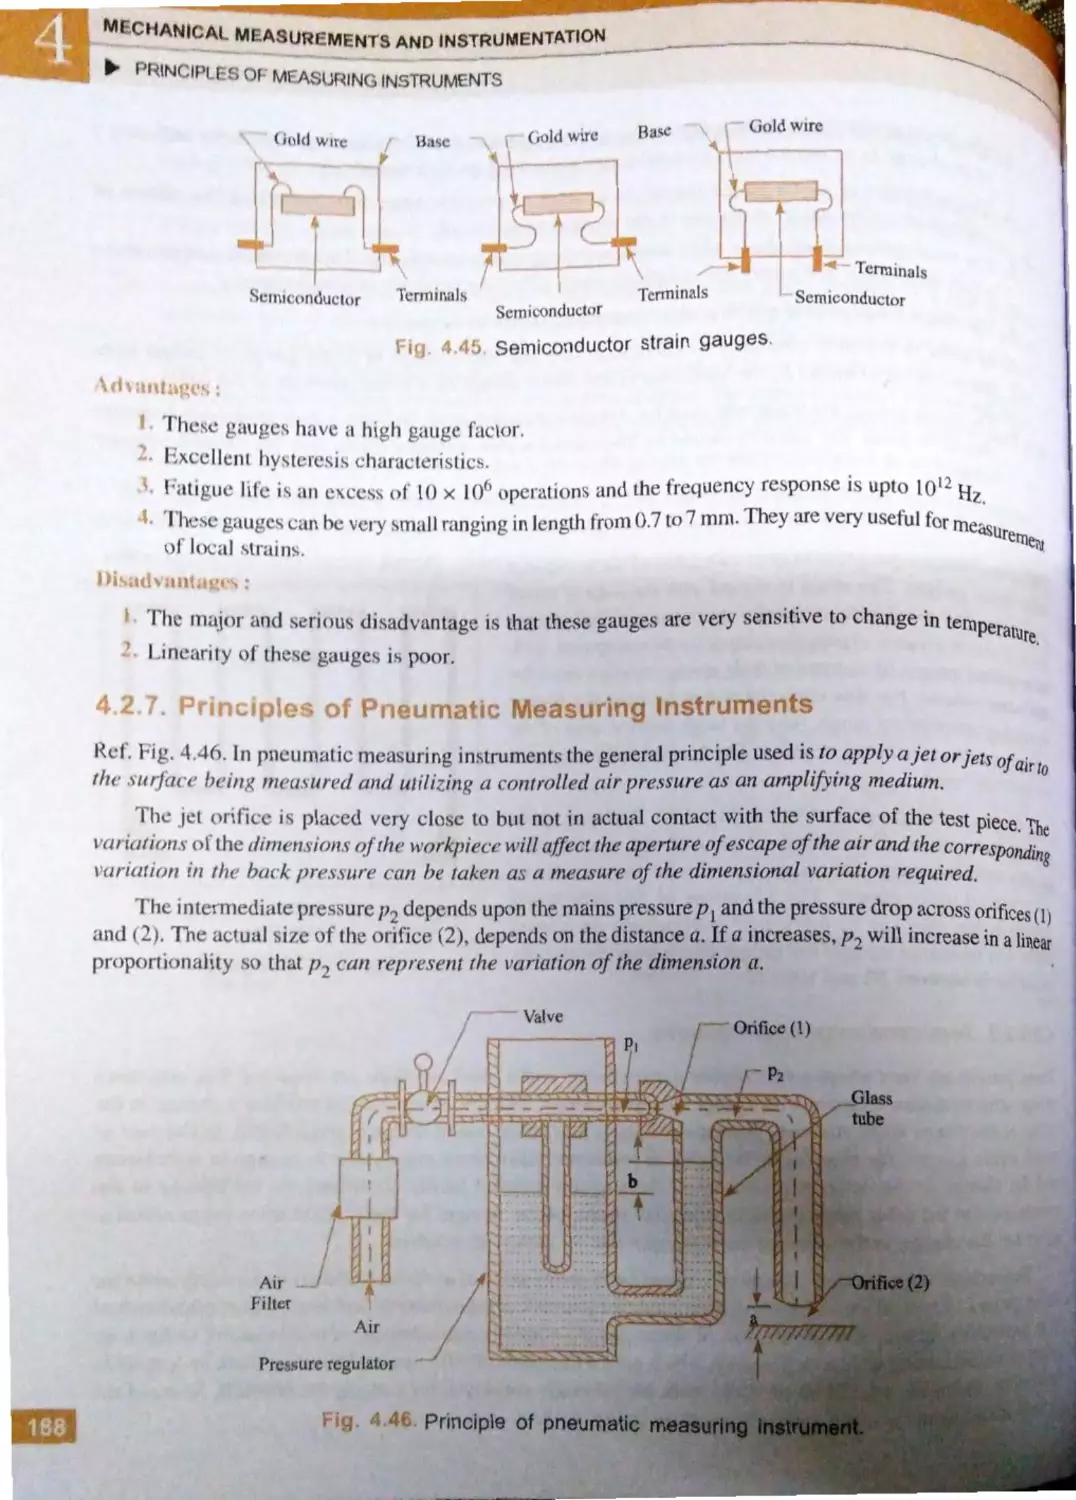 4.2.7. Principles of Pneumatic Measuring Instruments